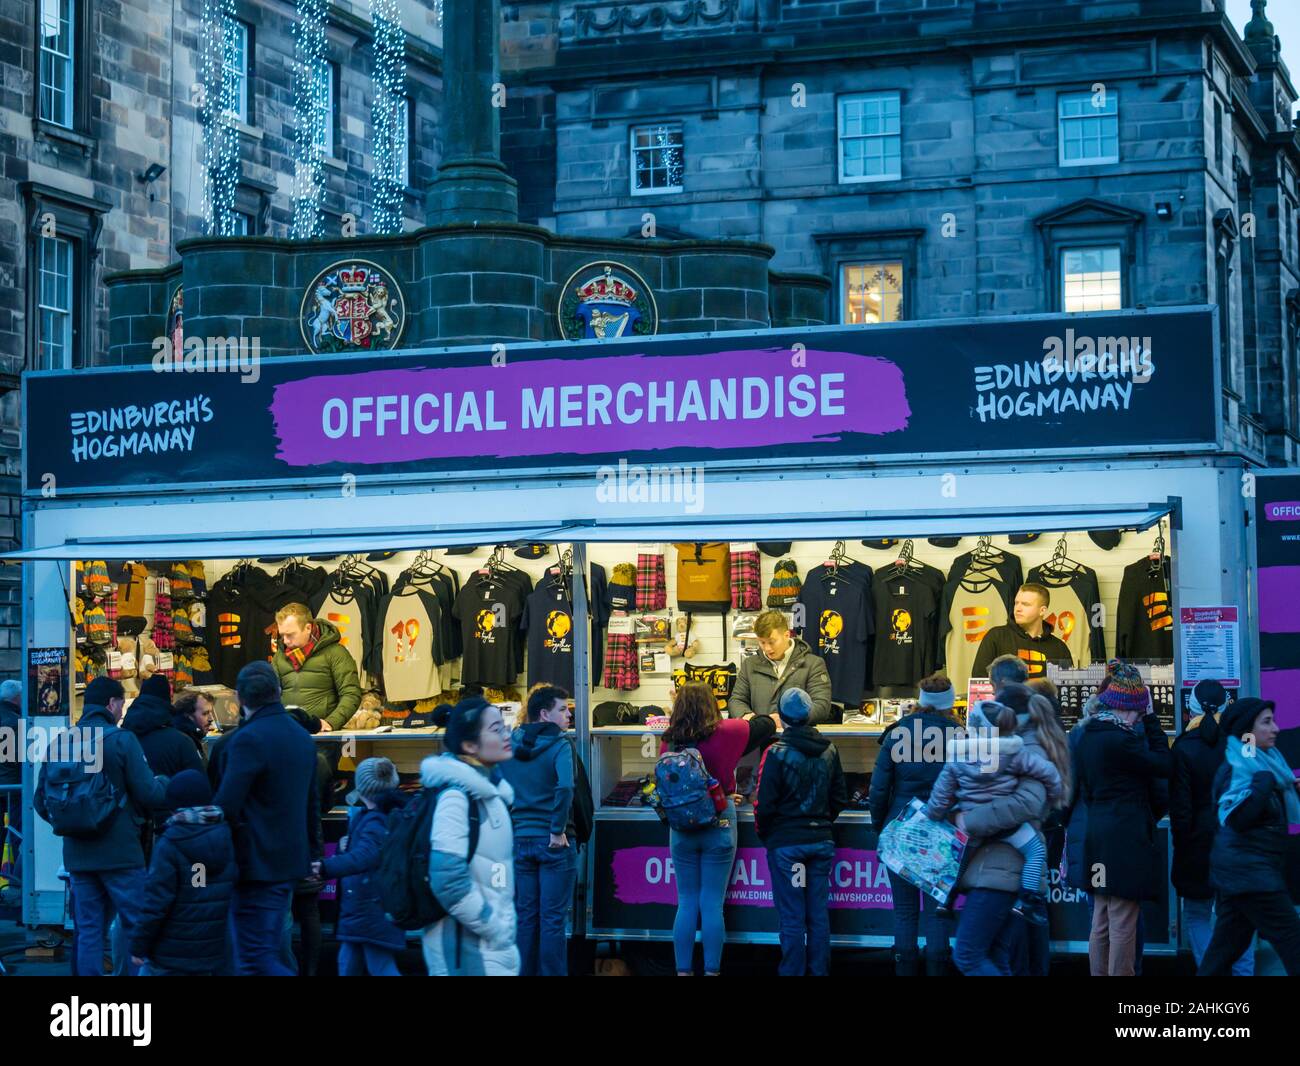 People buying merchandise for Edinburgh Hogmanay at street stall selling official goods, Royal Mile, Edinburgh, Scotland, UK Stock Photo